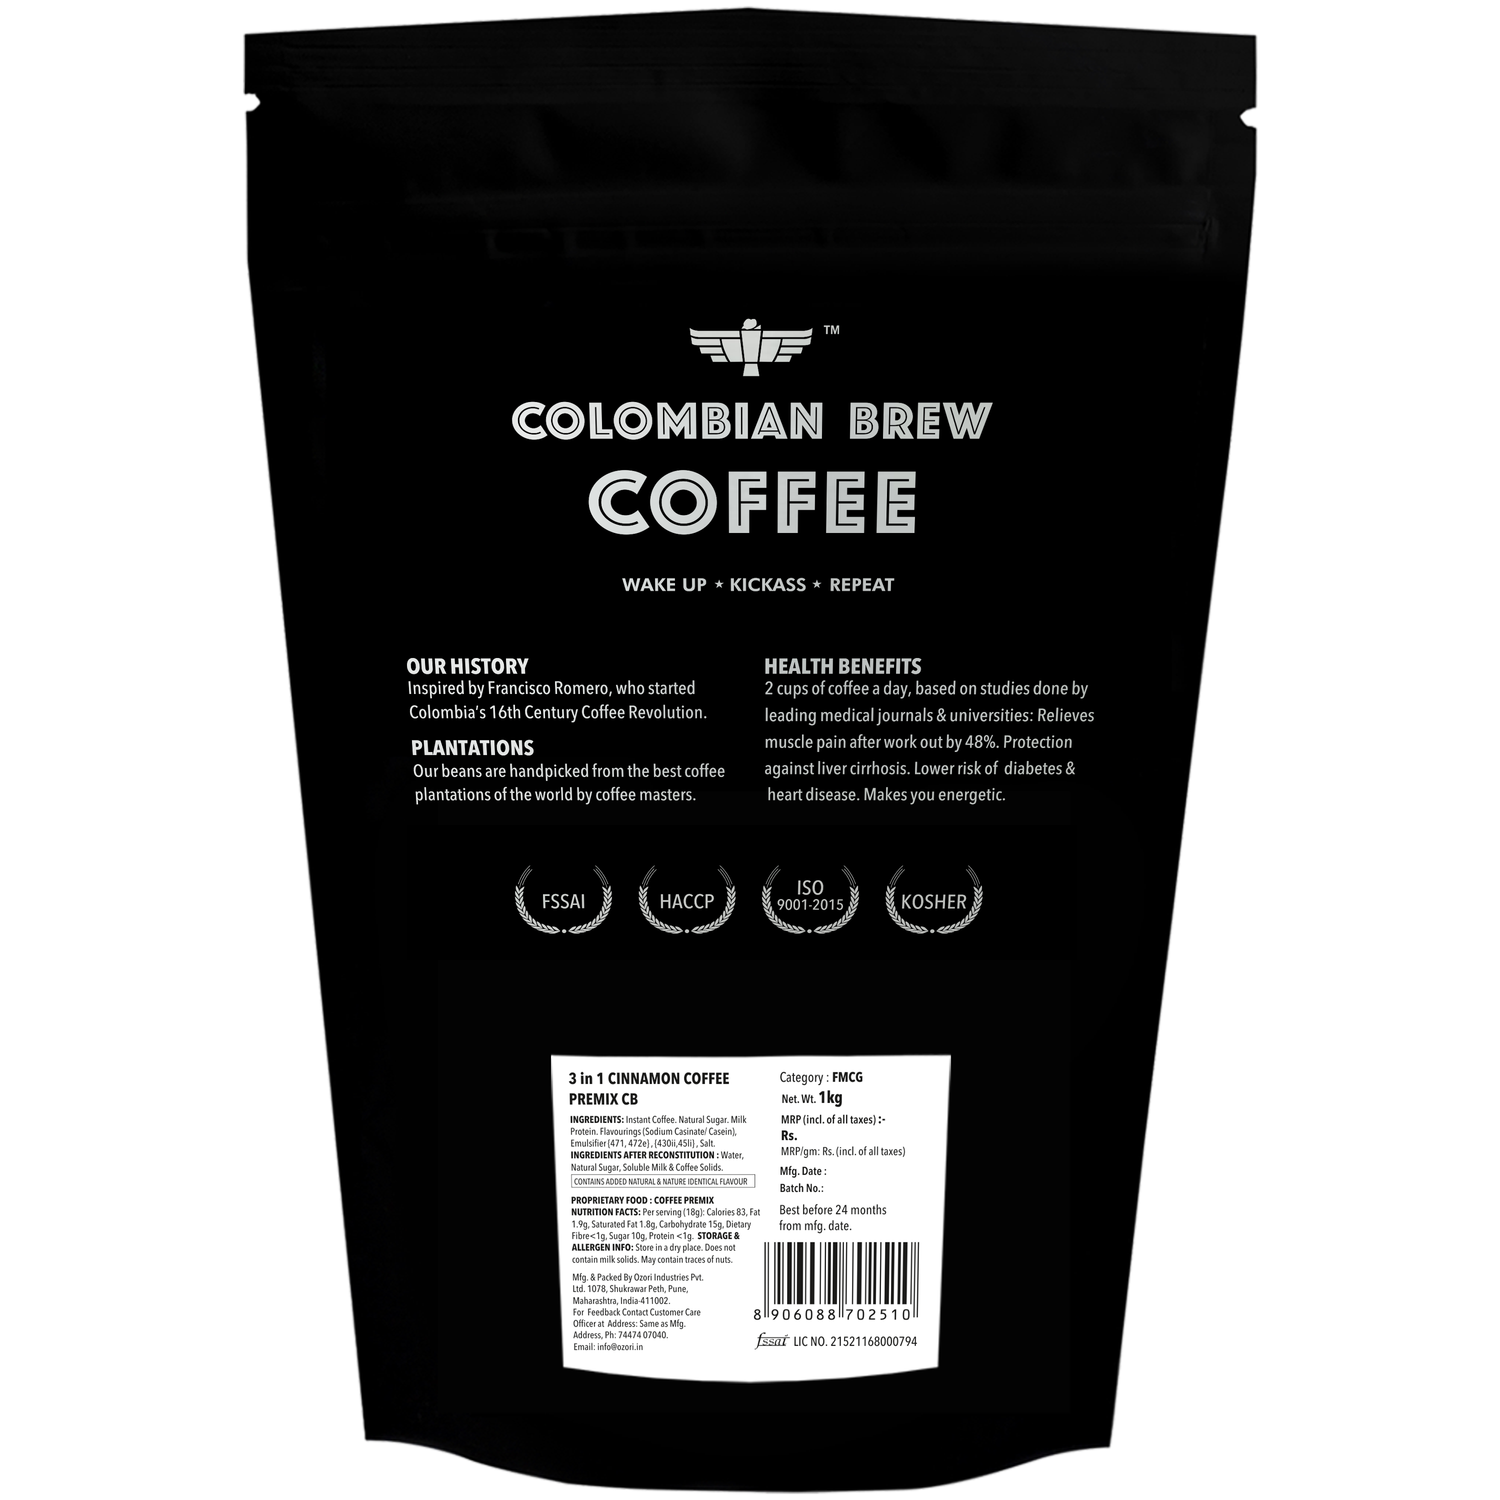 Cinnamon  Café Latte, Instant Coffee Powder Pre-mix (3 in 1) 1kg 